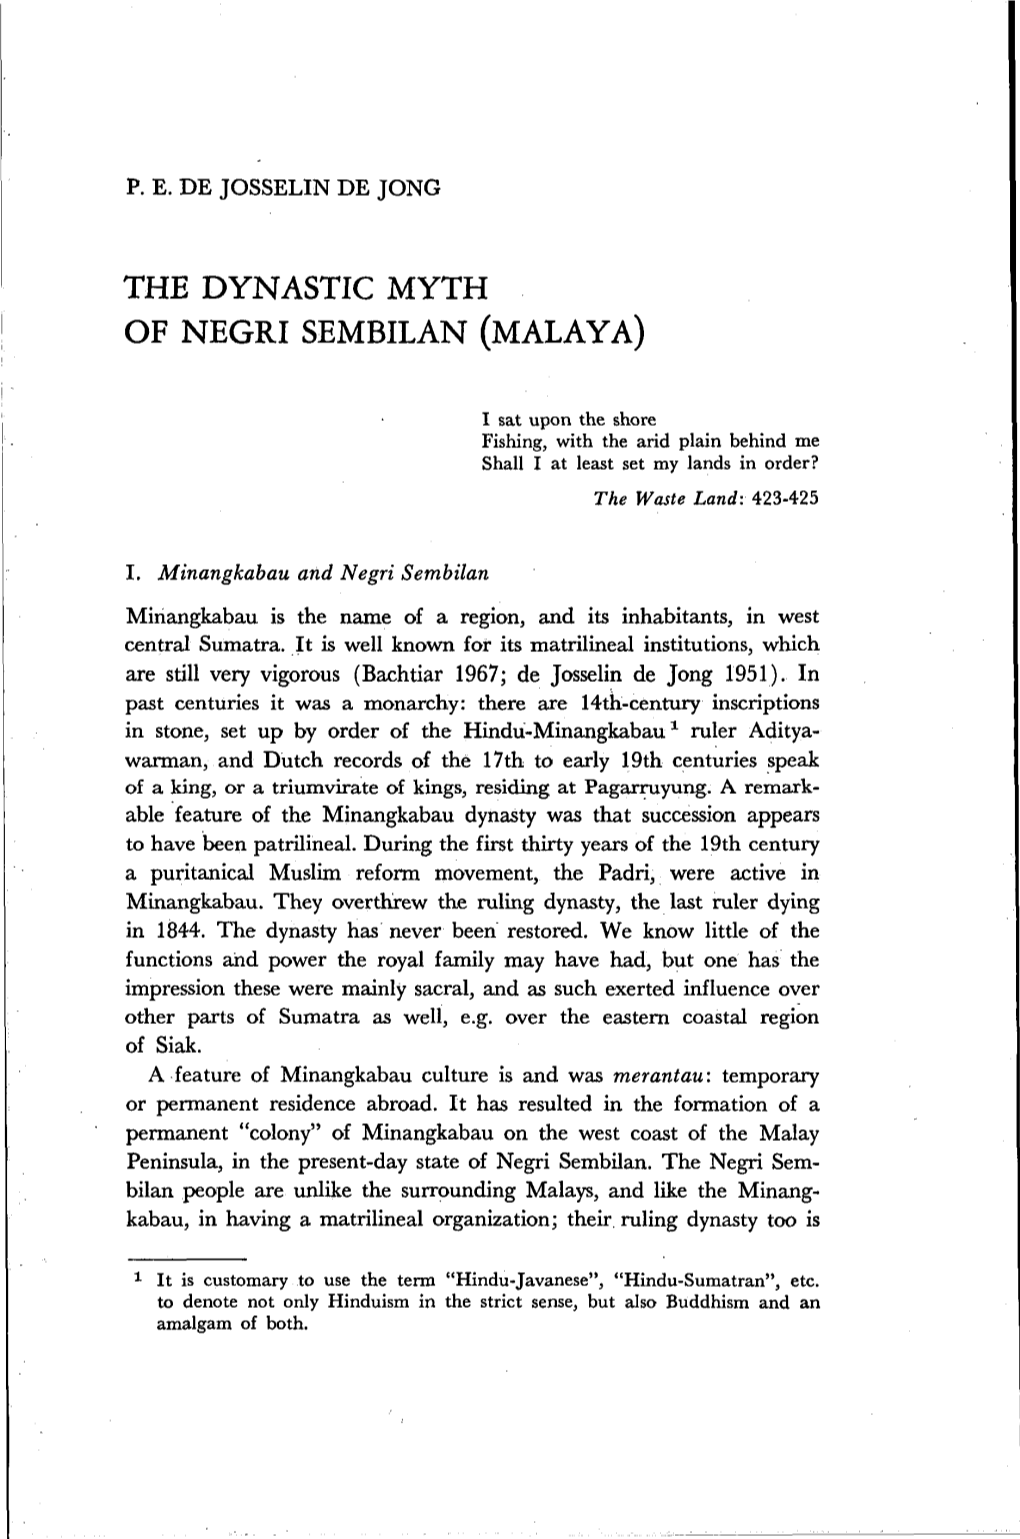 The Dynastic Myth of Negri Sembilan (Malaya)